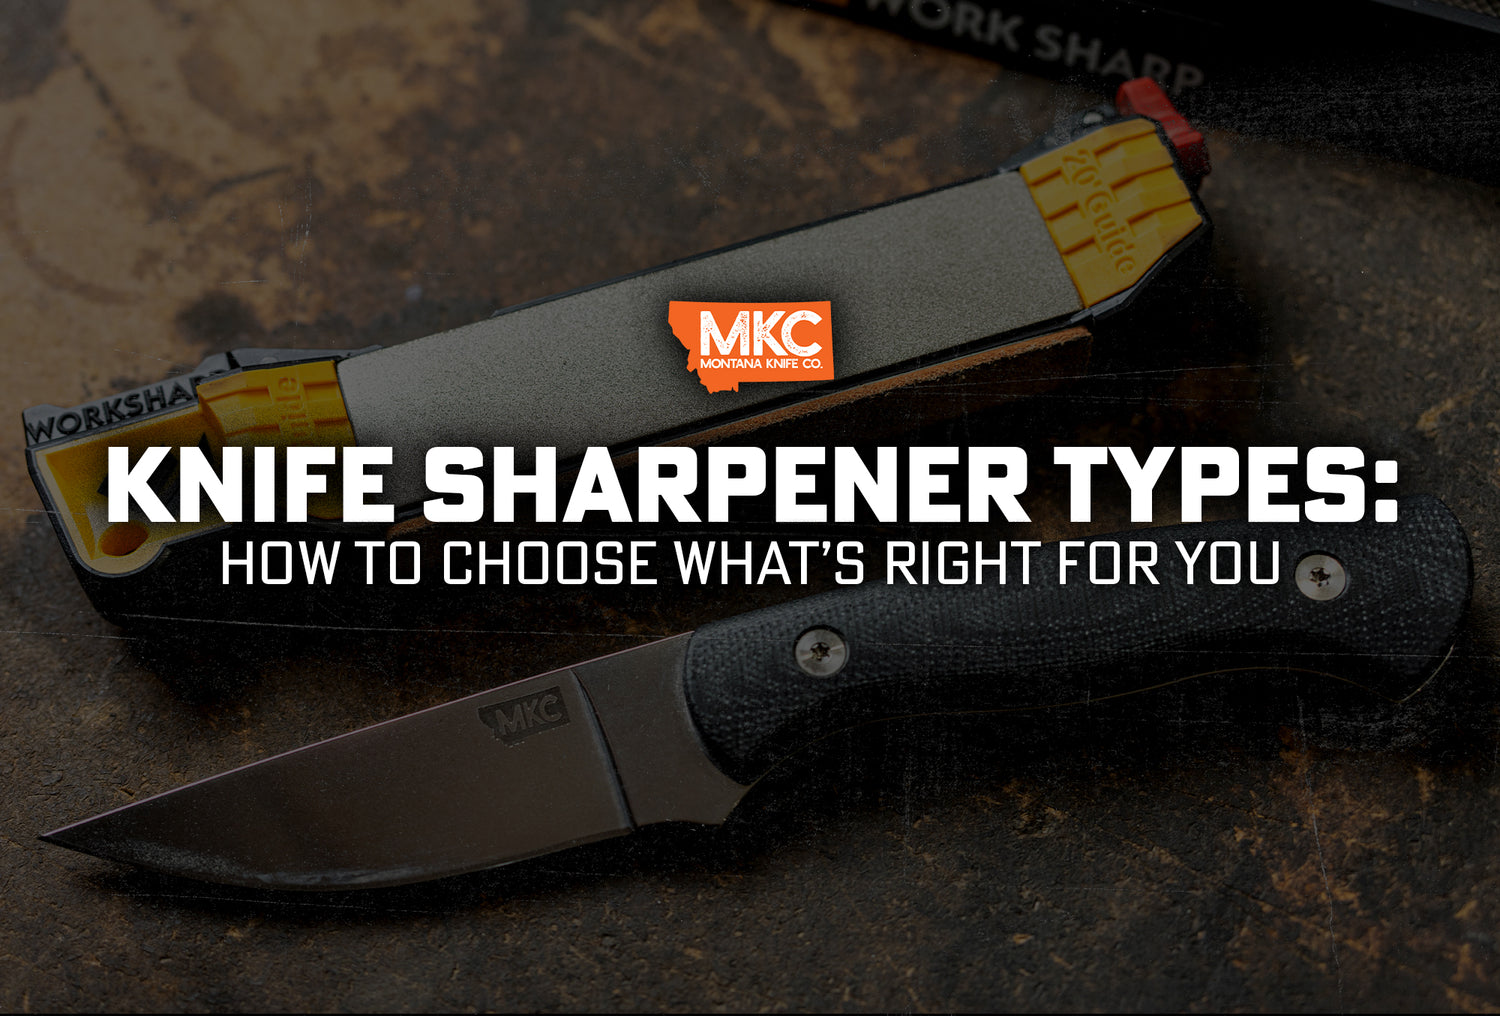 Work Sharp Electric Kitchen Knife Sharpener Master Belt Kit